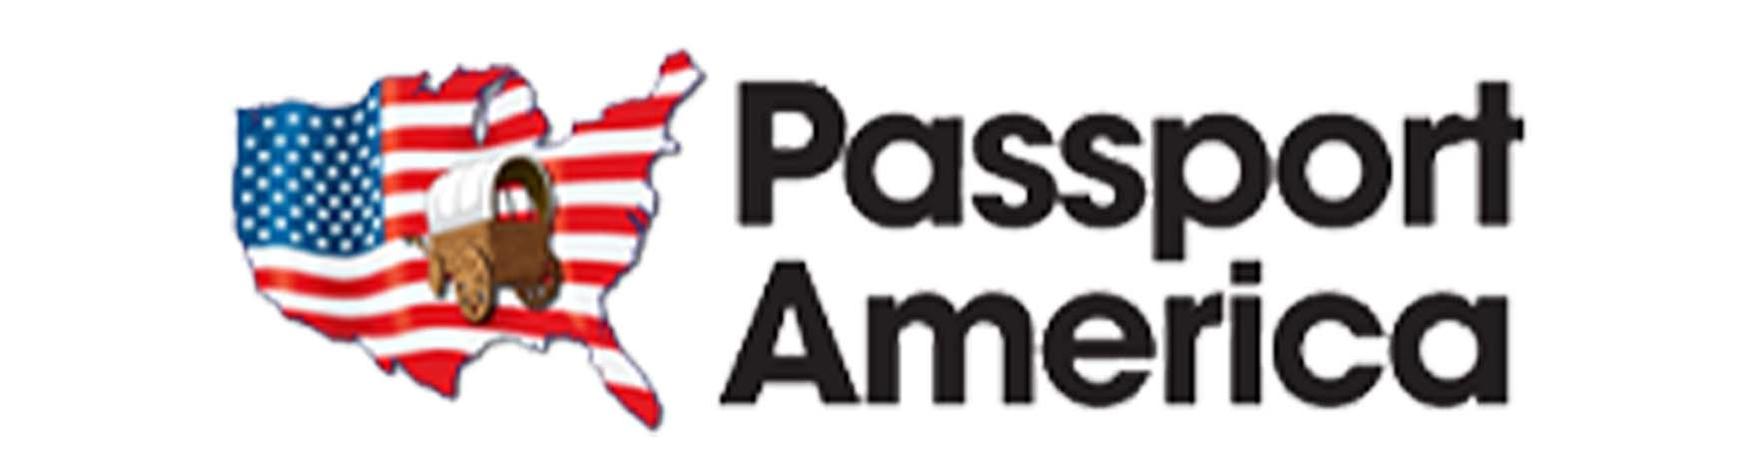 Passport America Banner Image